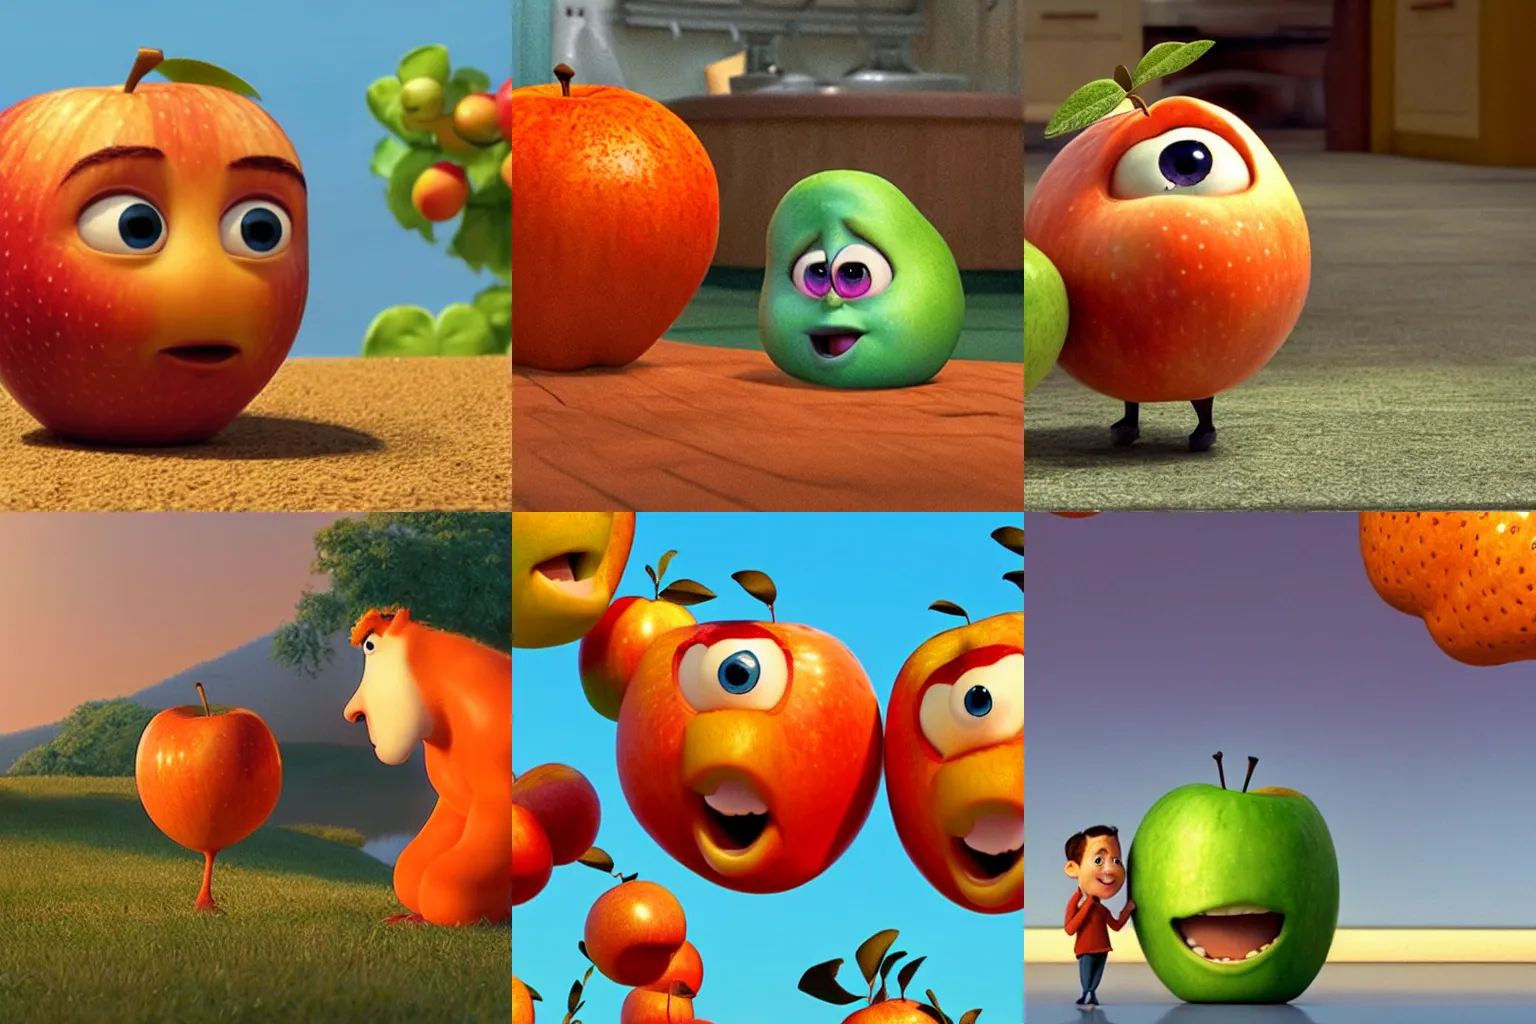 Prompt: Pixar movie about an orange apple